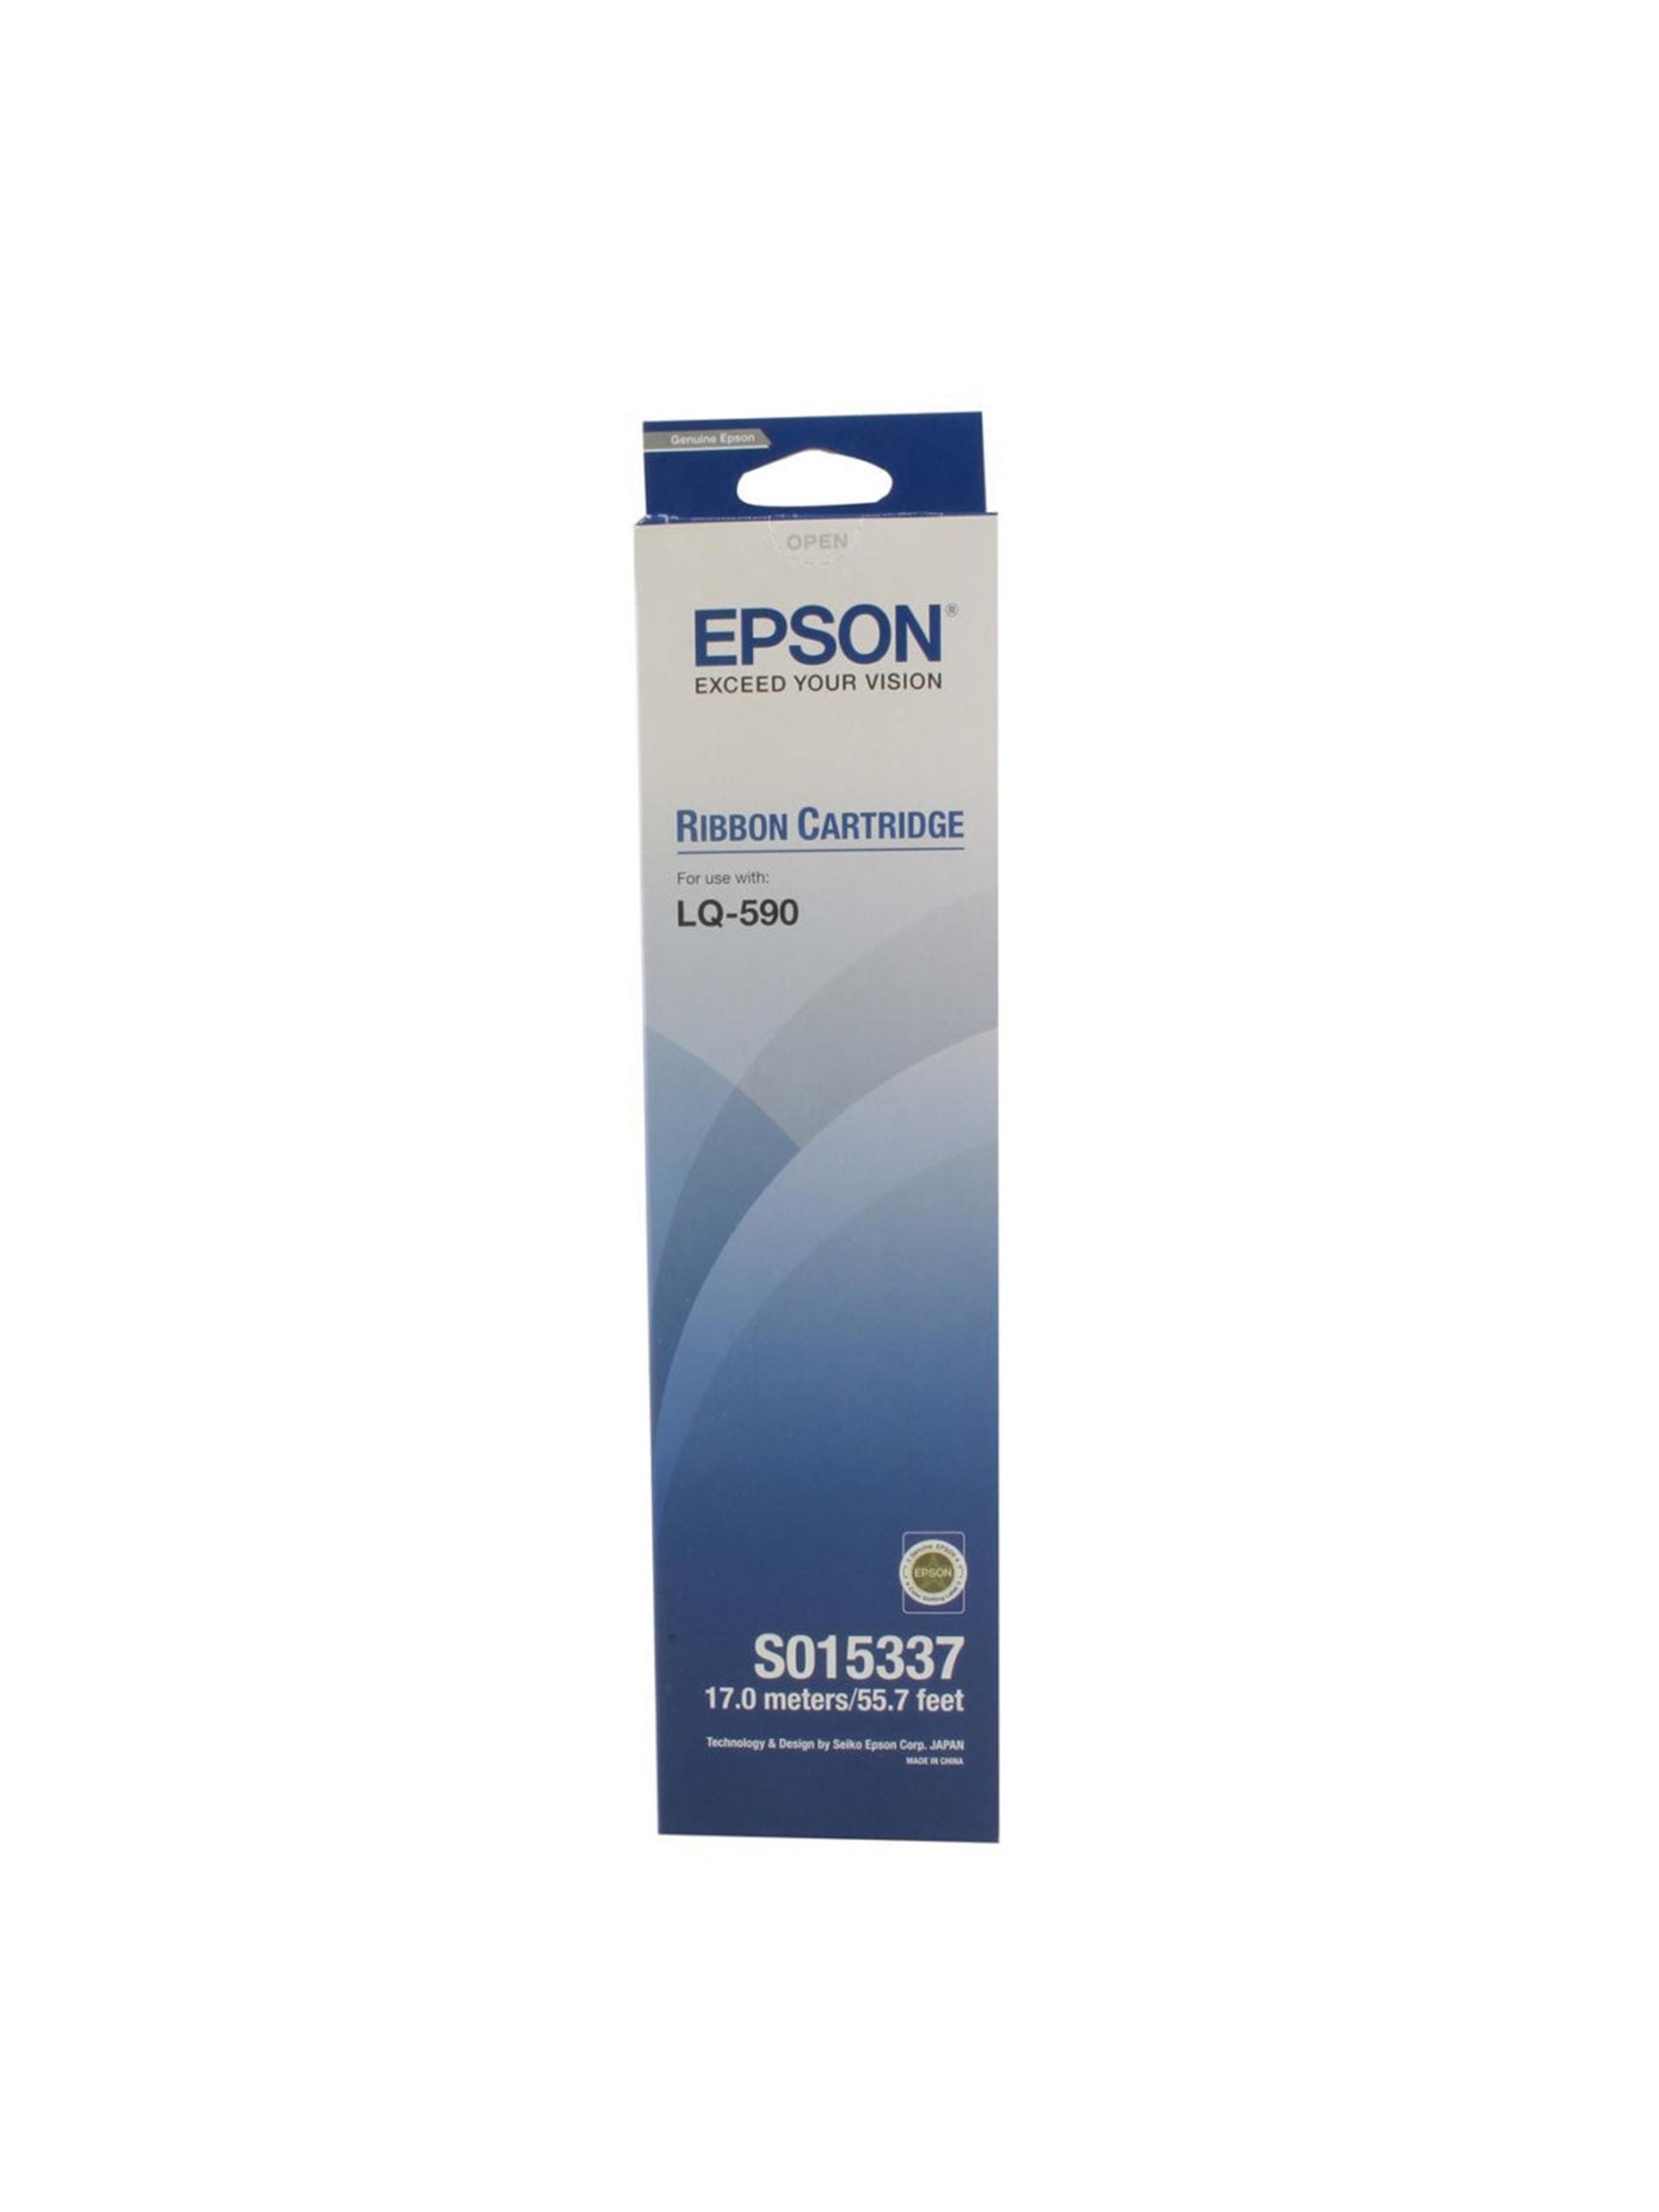 EpsonLQ-590 Ribbon Cartridge